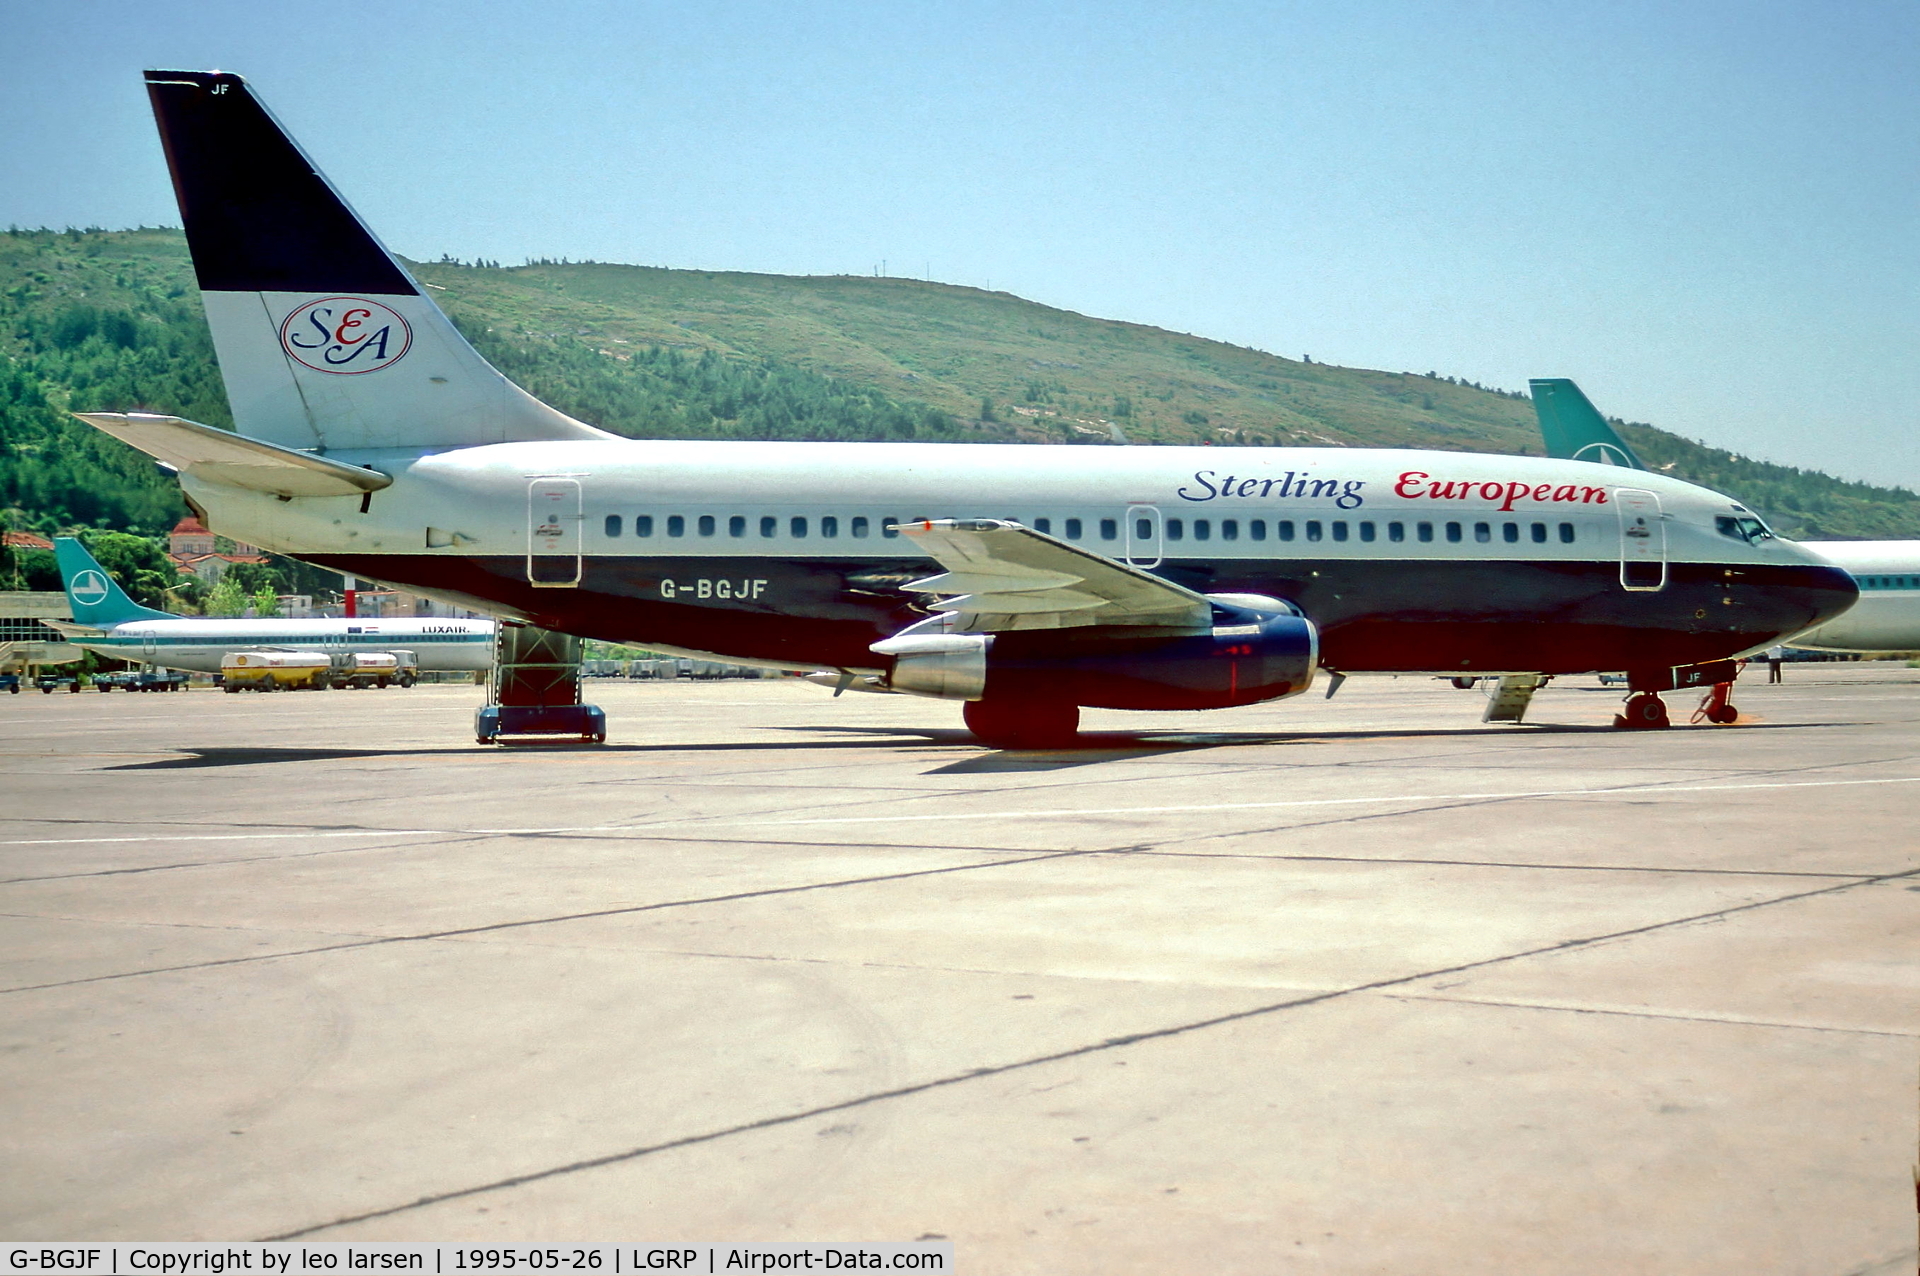 G-BGJF, 1980 Boeing 737-236 C/N 22027, Rhodos 26.5.95 on lease to
Sterling European AW.